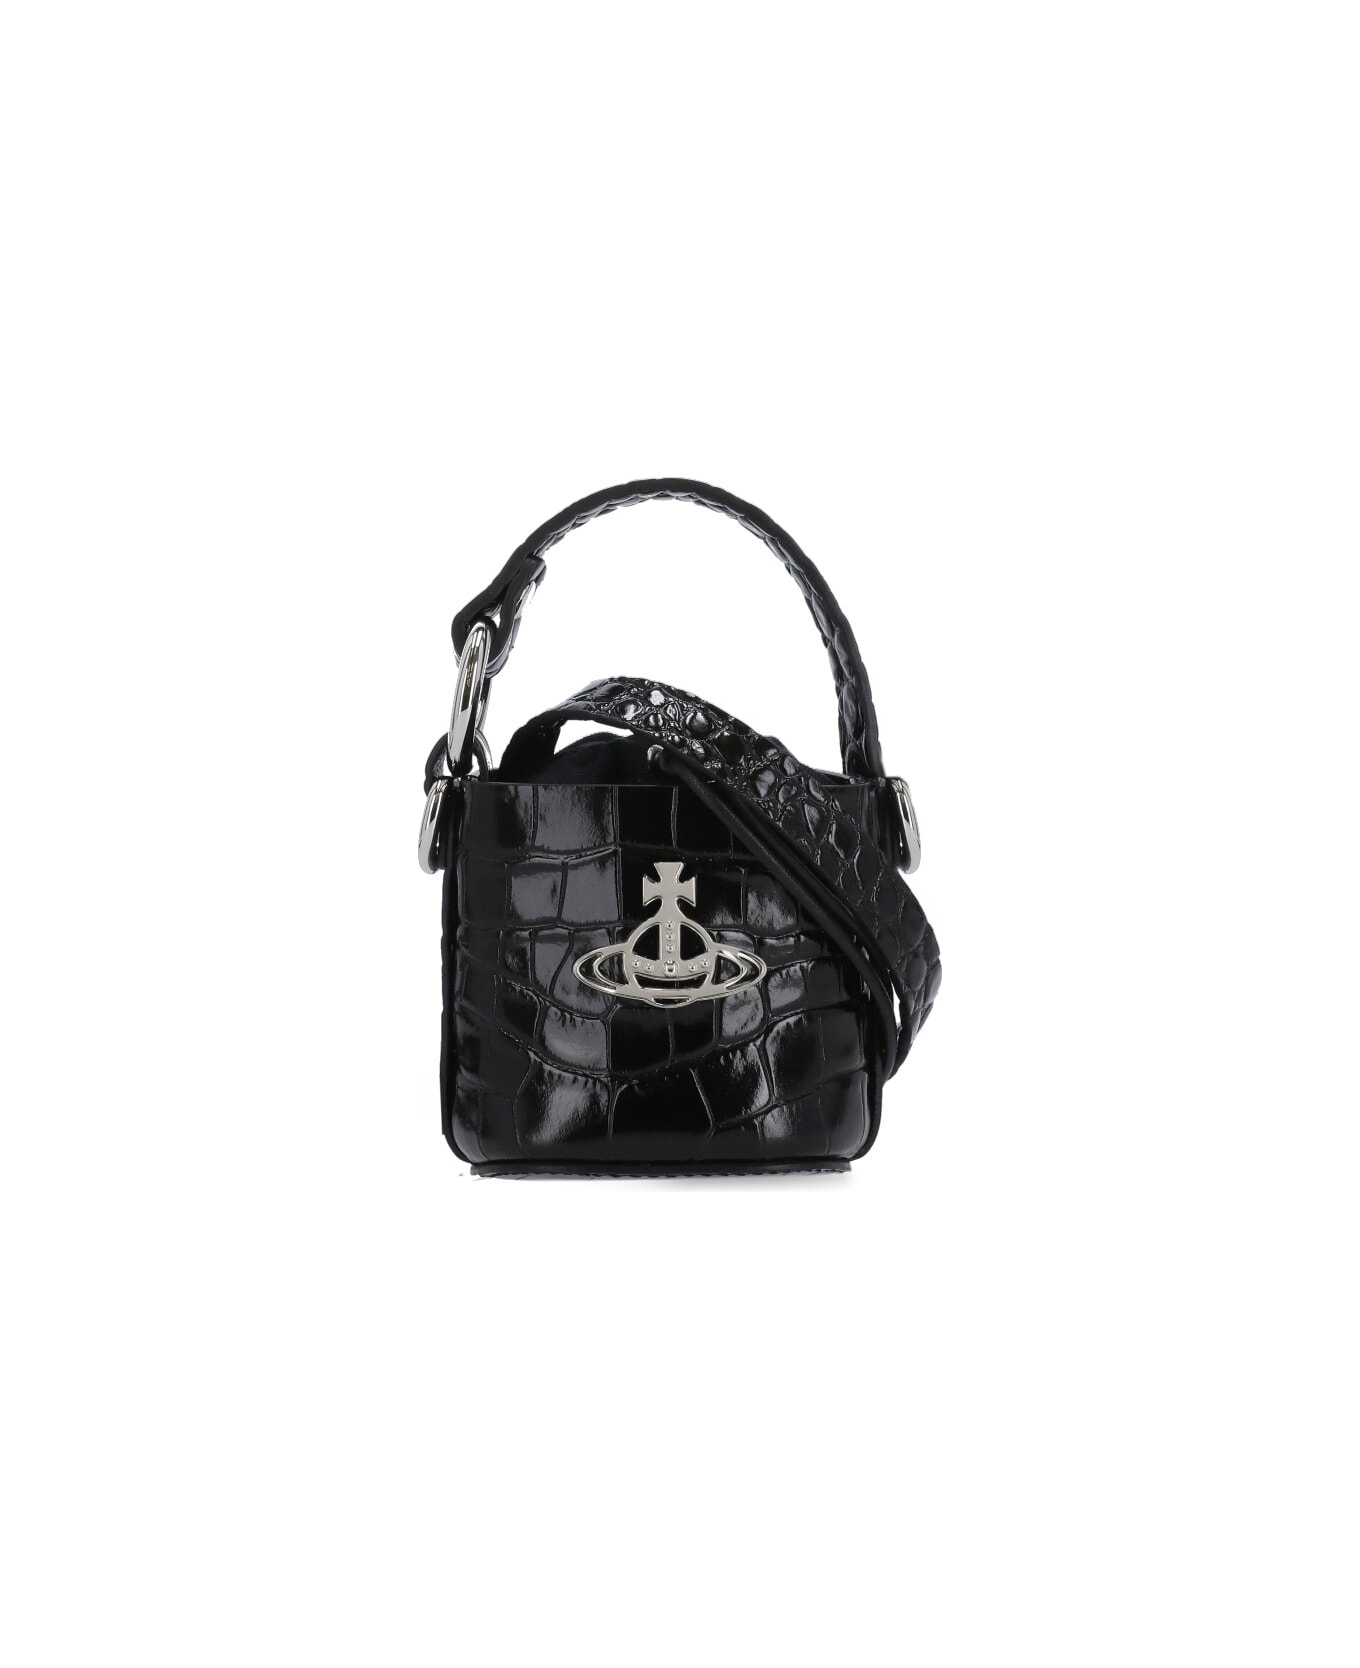 Vivienne Westwood Mini Daisy Bag - Black